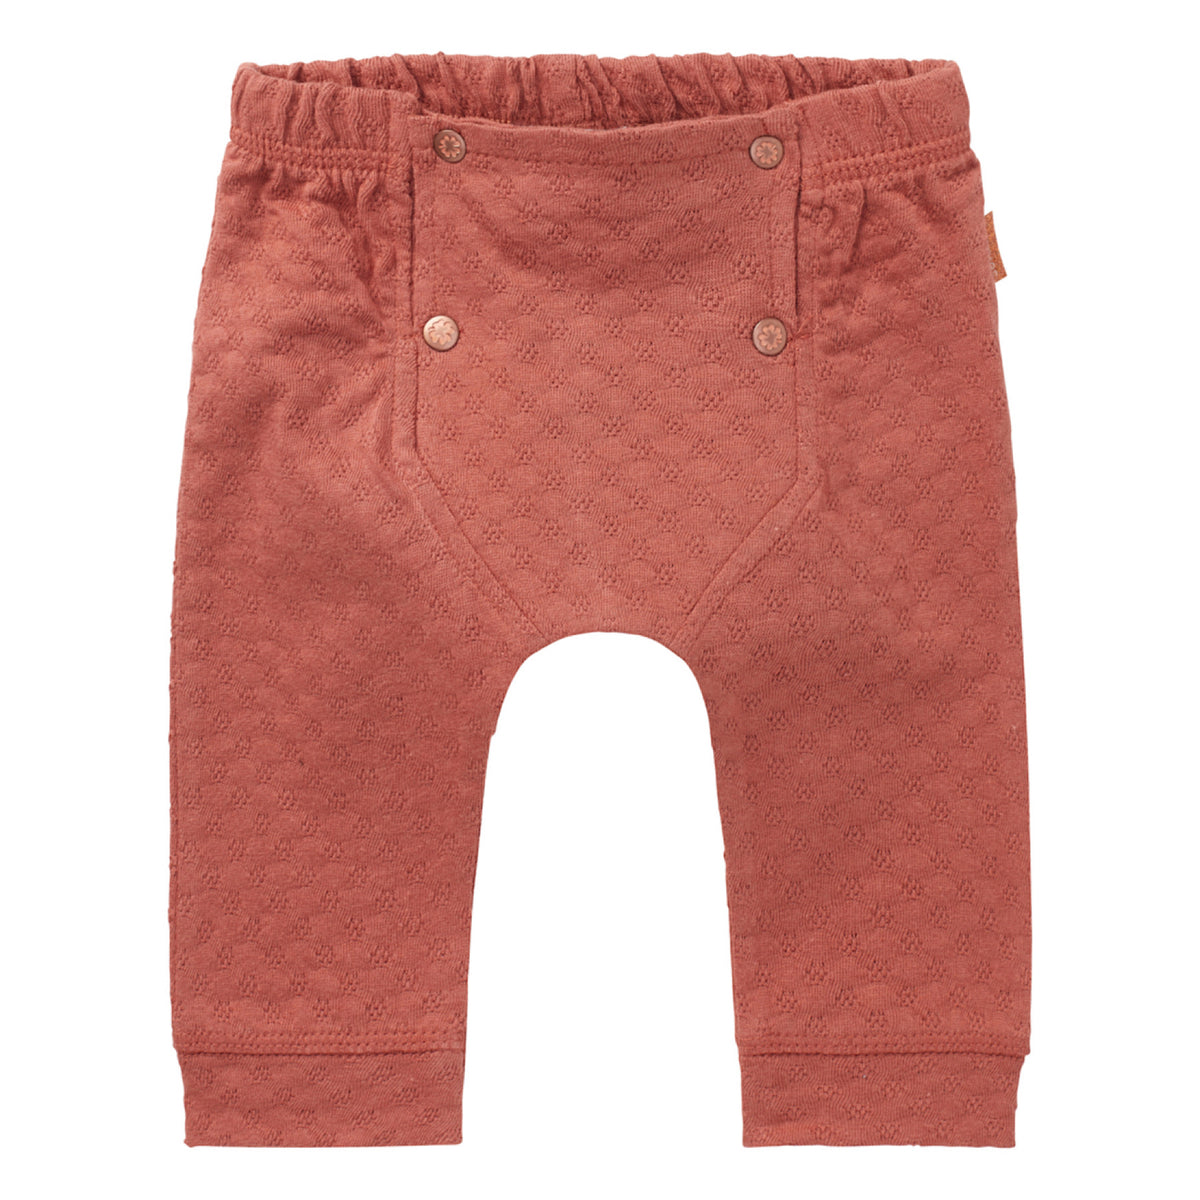 Cedarwood Cotton Knit Trousers